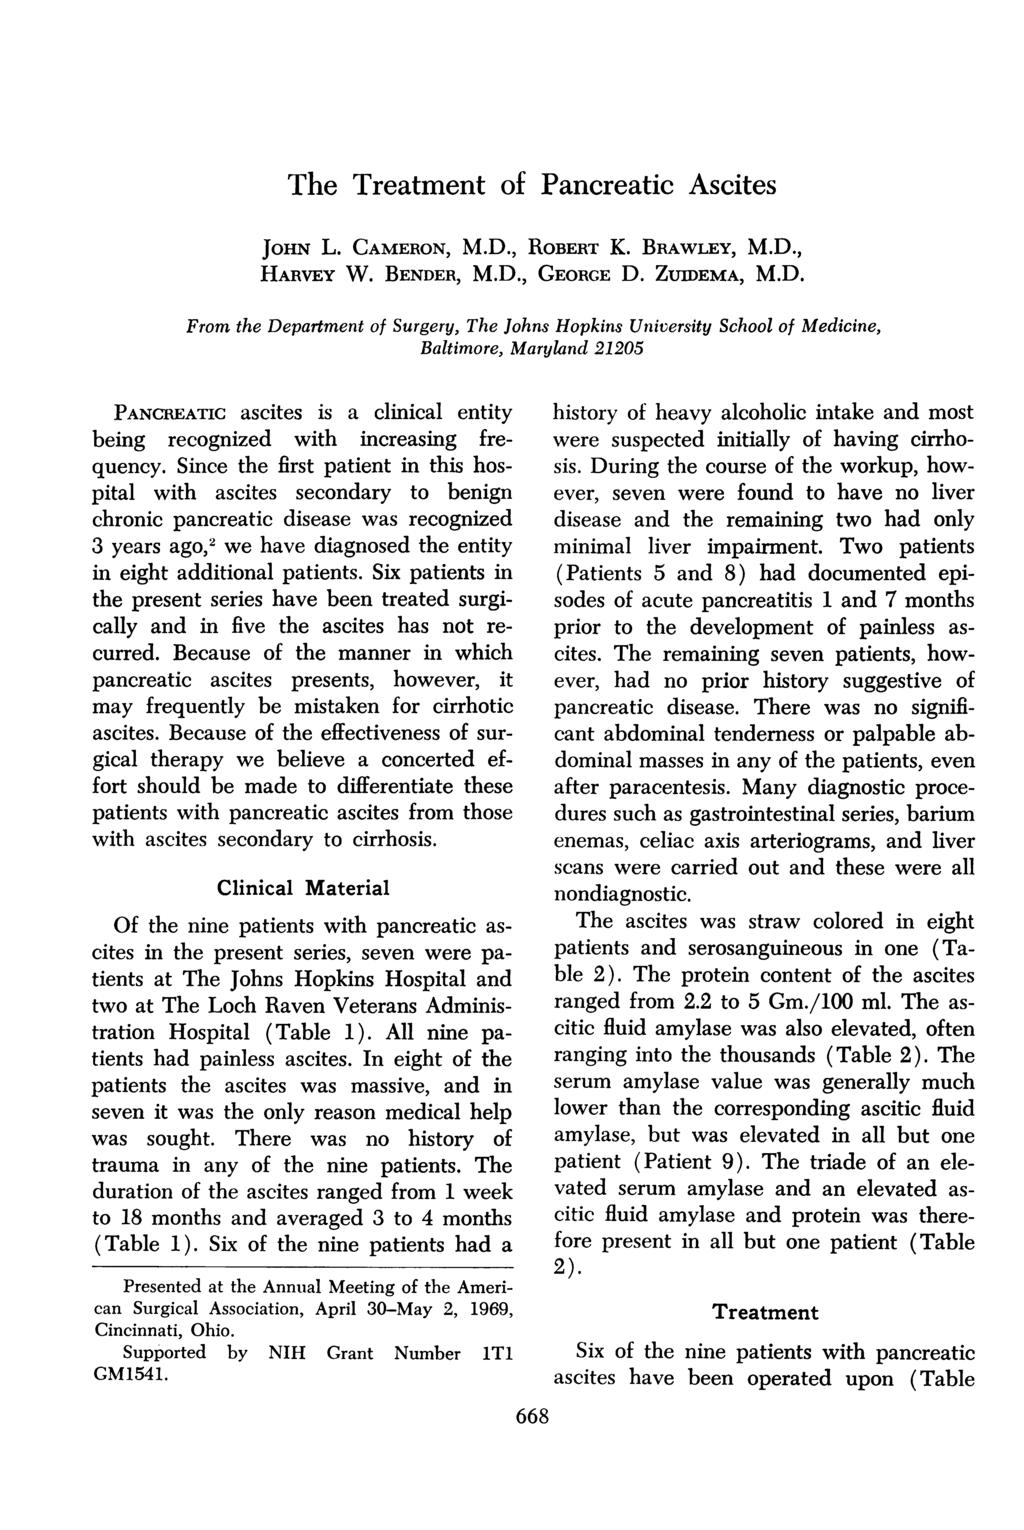 The Treatment of Pancreatic Ascites JOHN L. CAMERON, M.D.